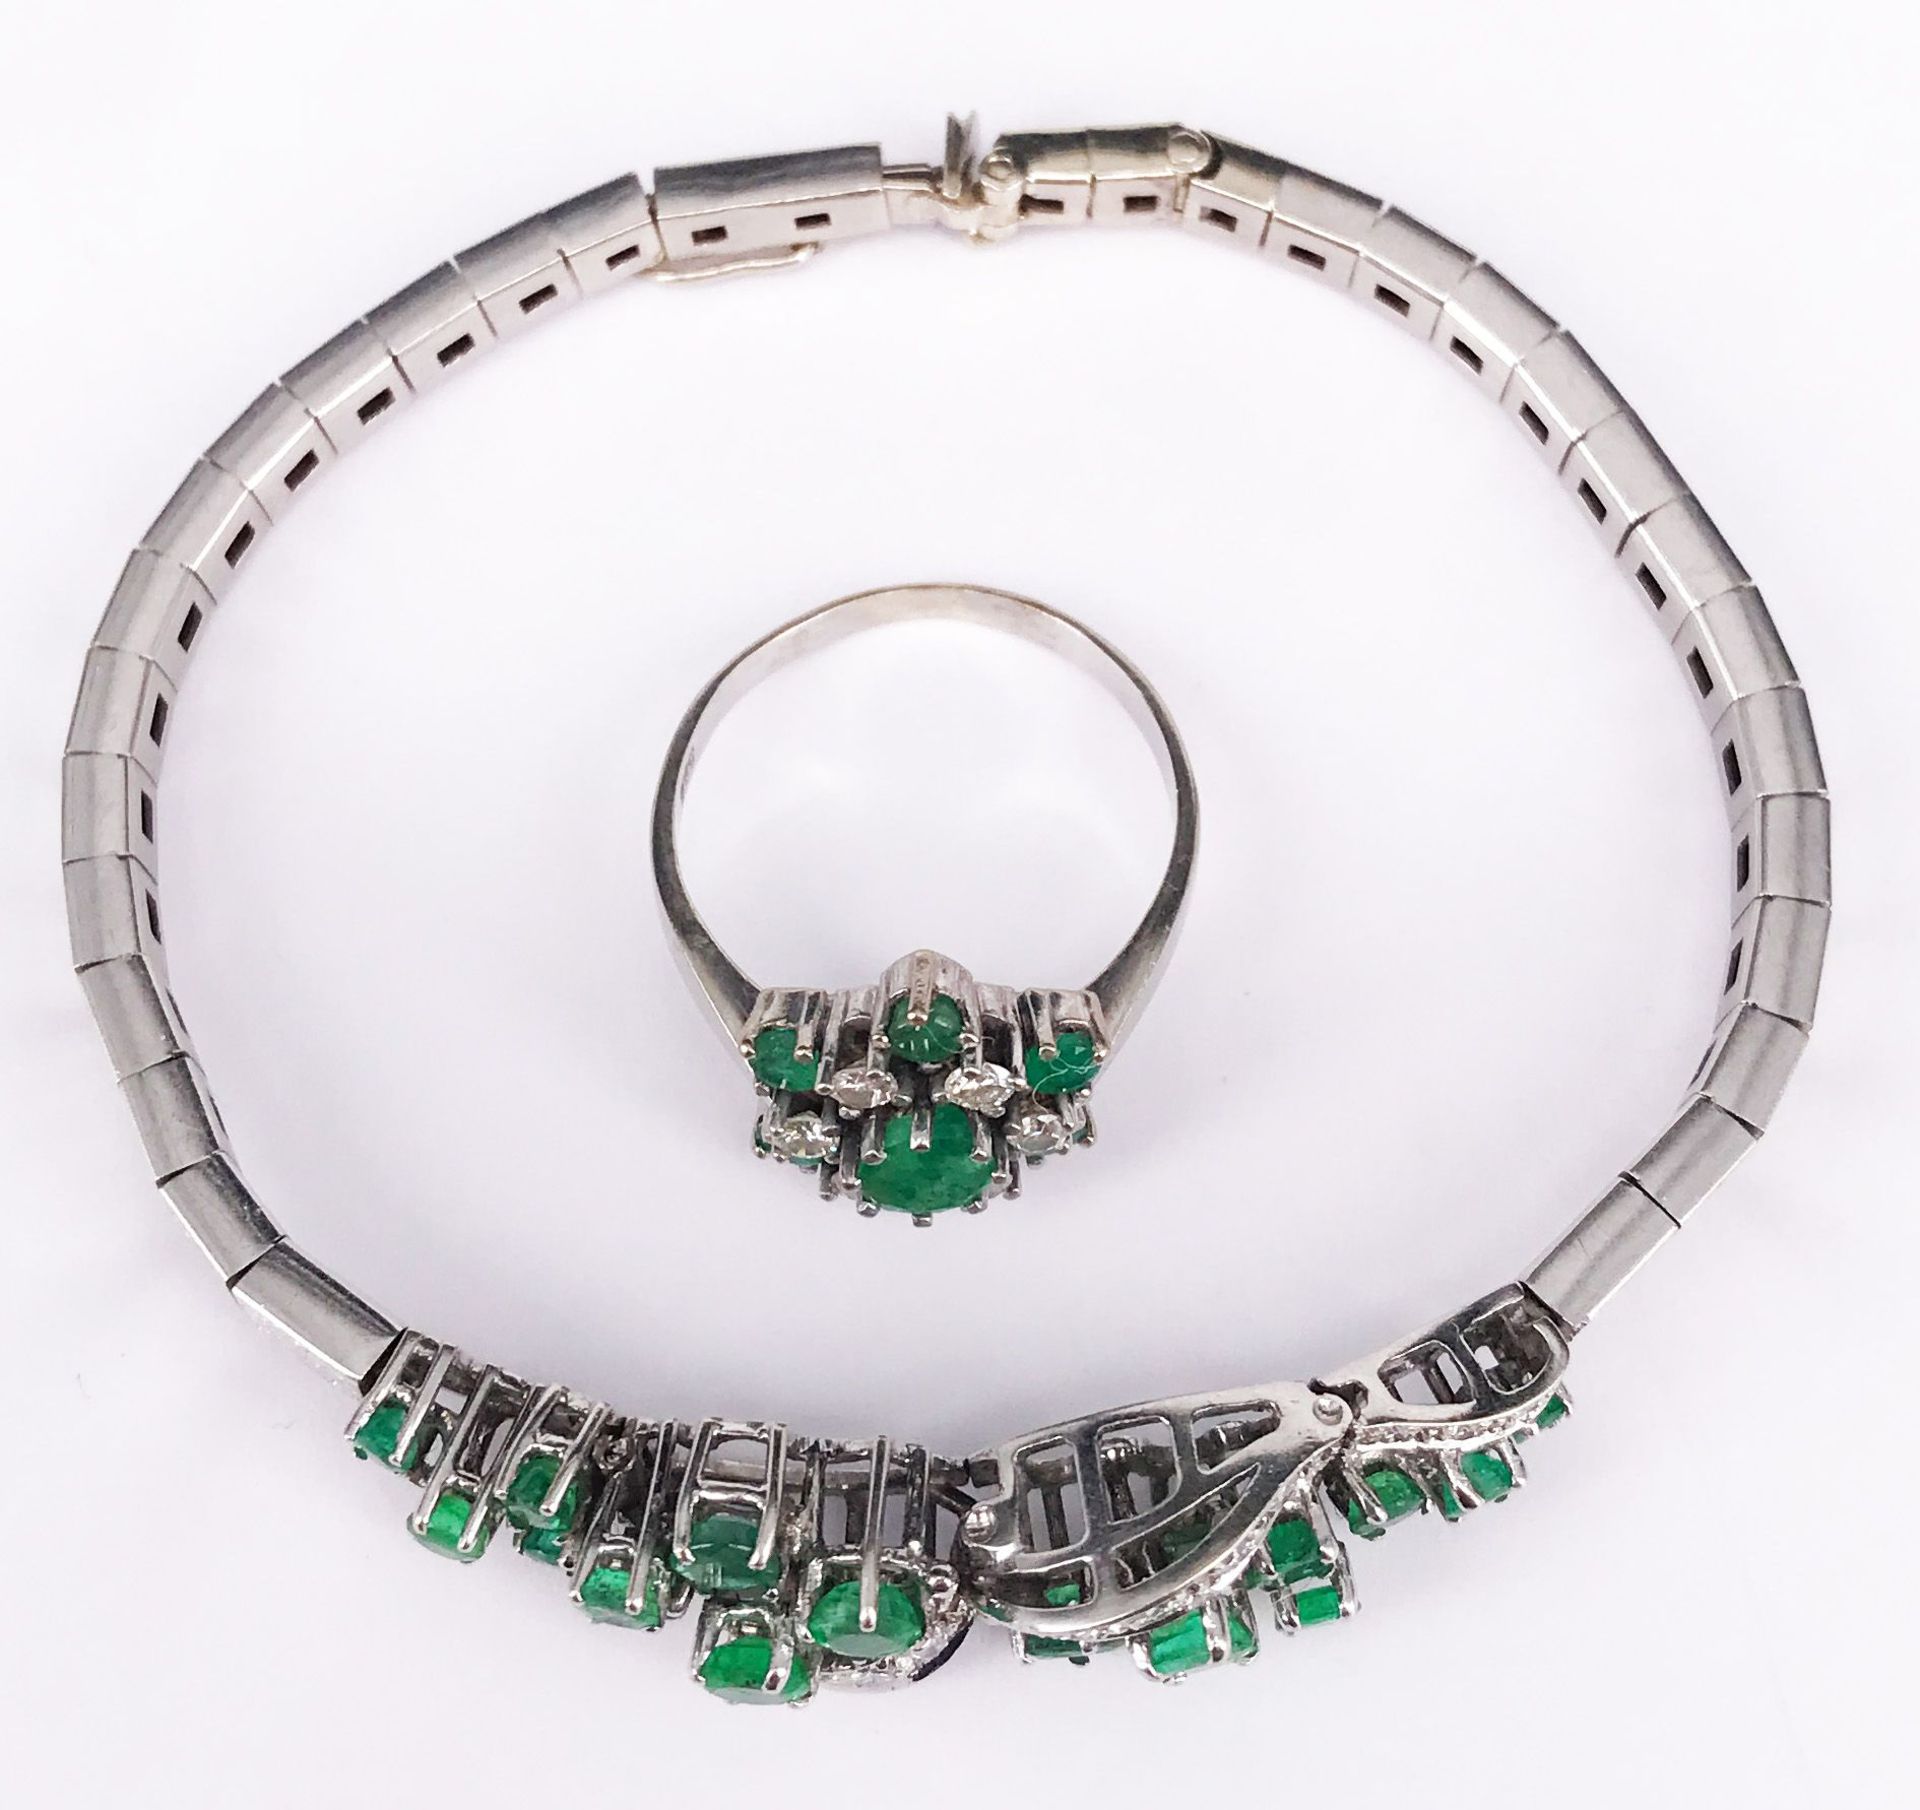 Schmuck mit Smaragden und Diamanten: Armband, 750er WG, 18,30 g, 18 Smaragde laut Kaufbeleg 2,45